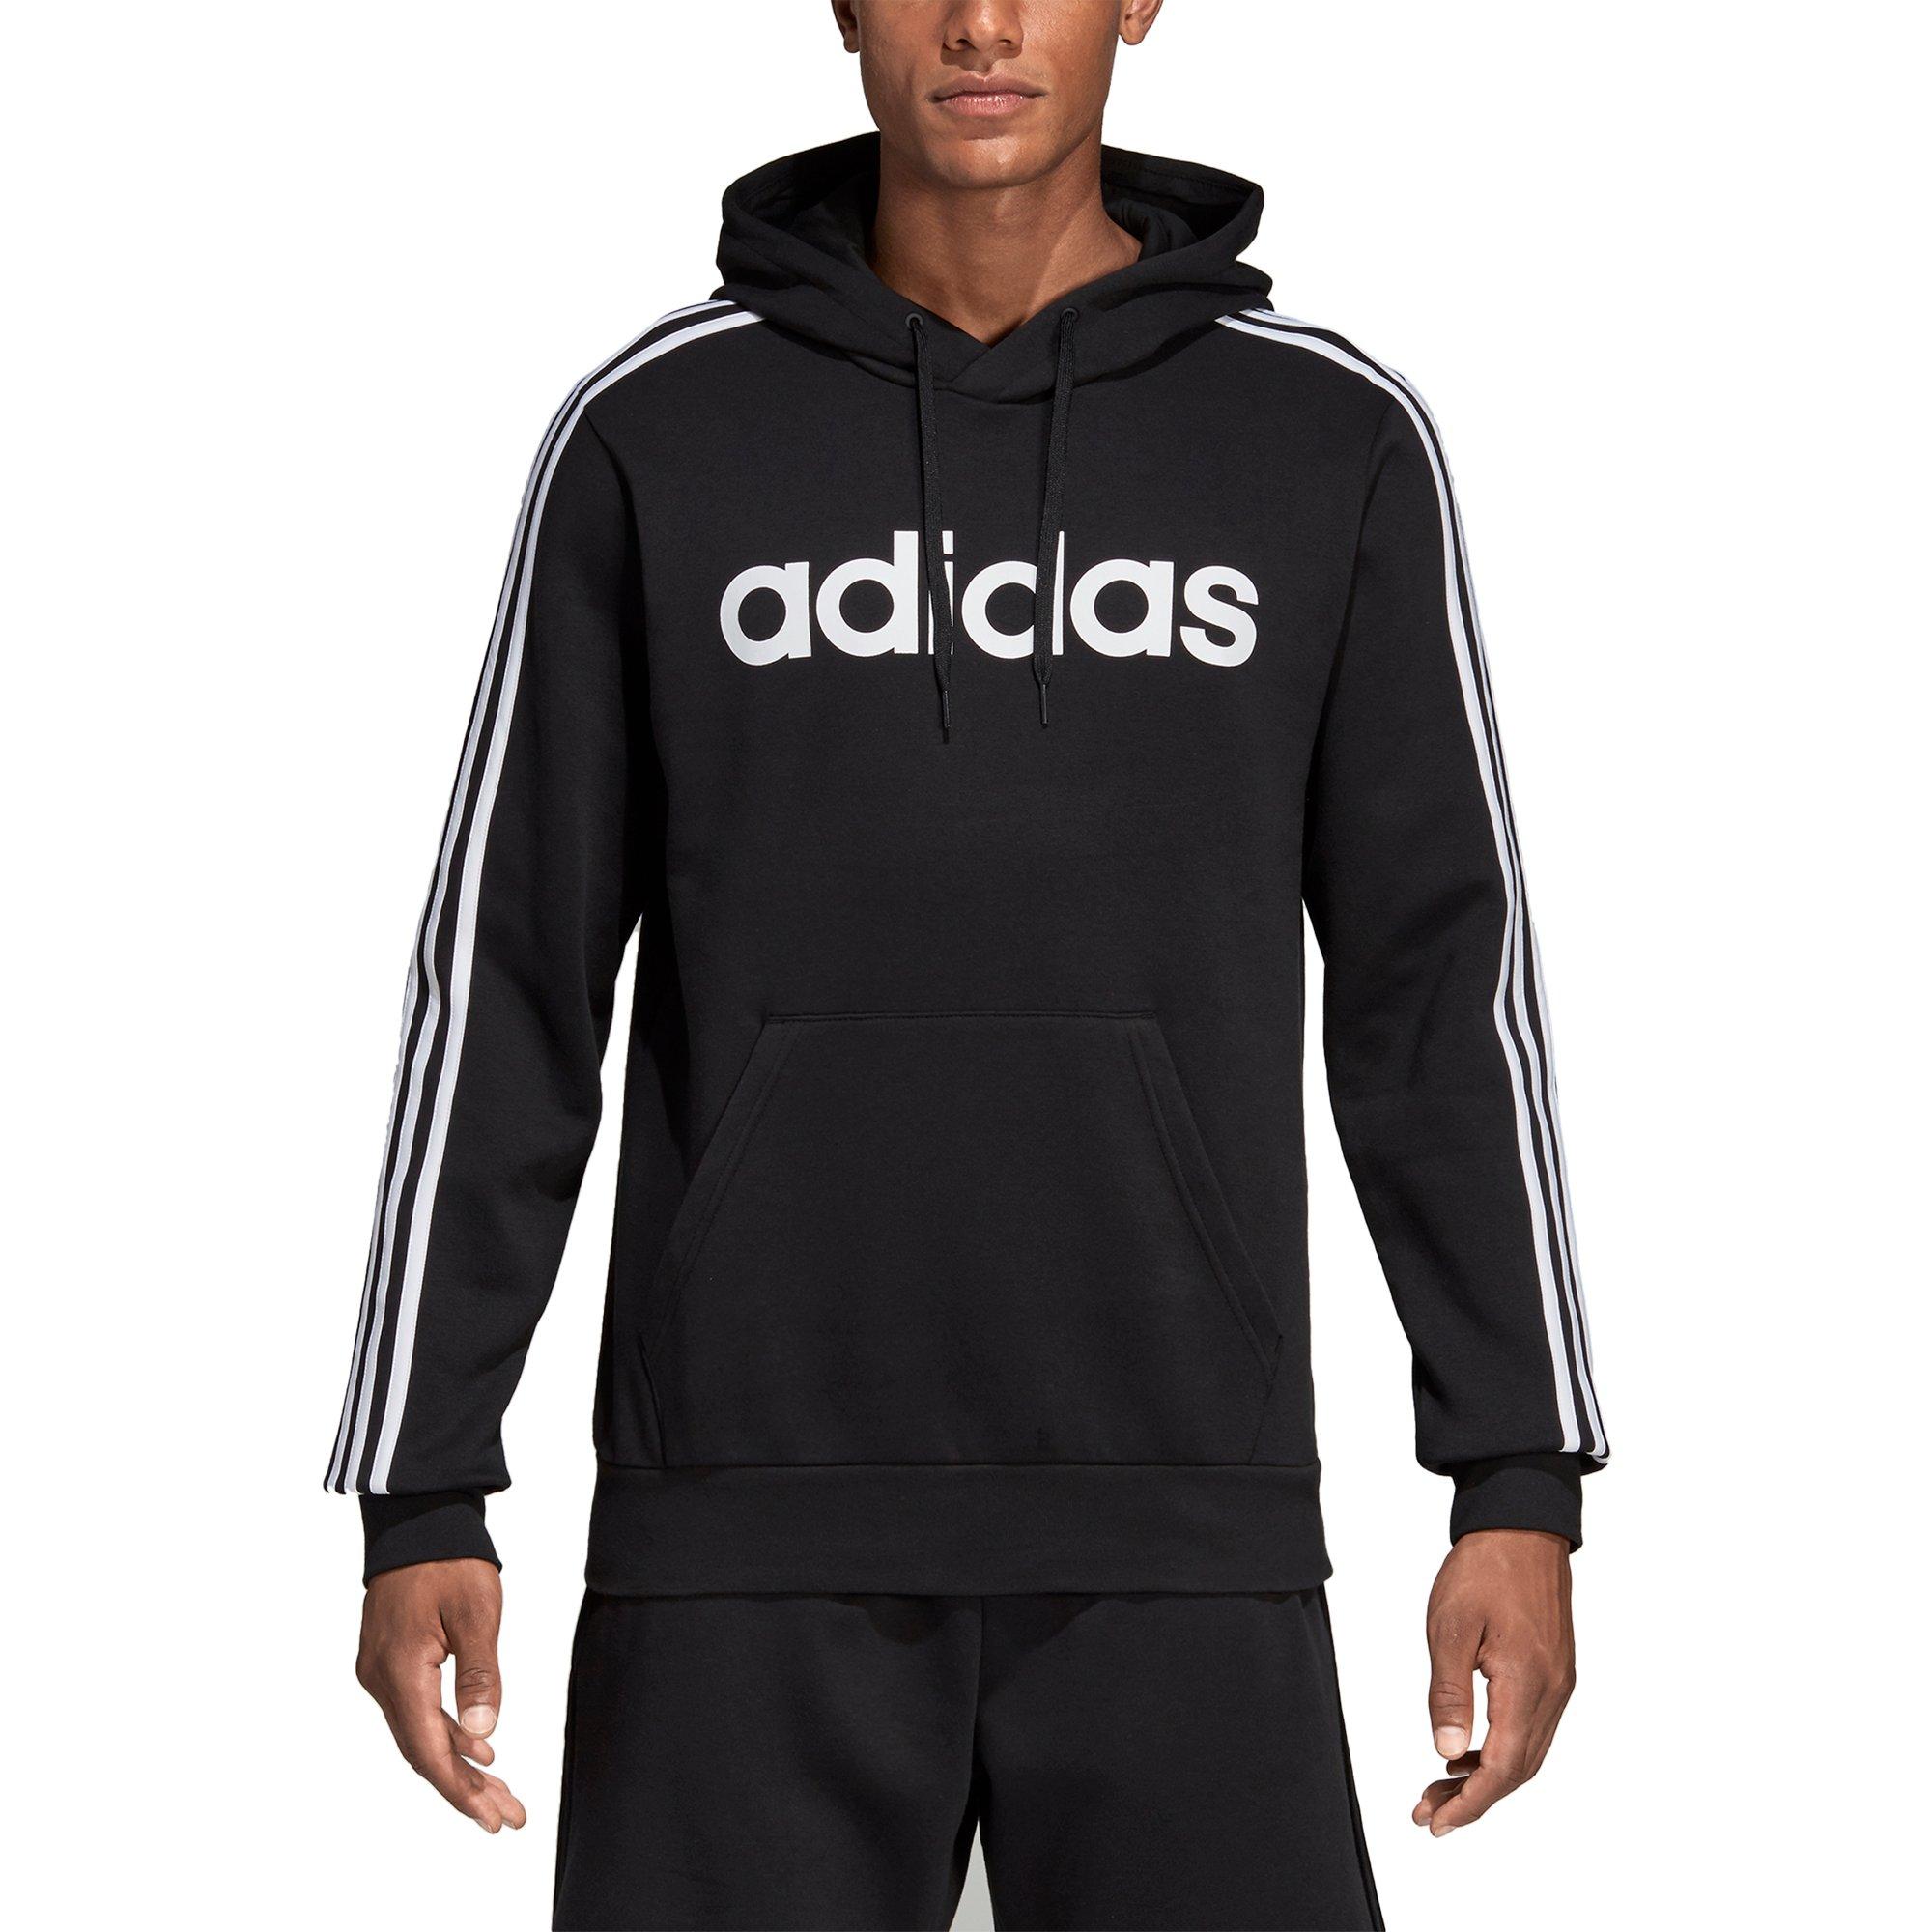 hibbett sports adidas hoodies